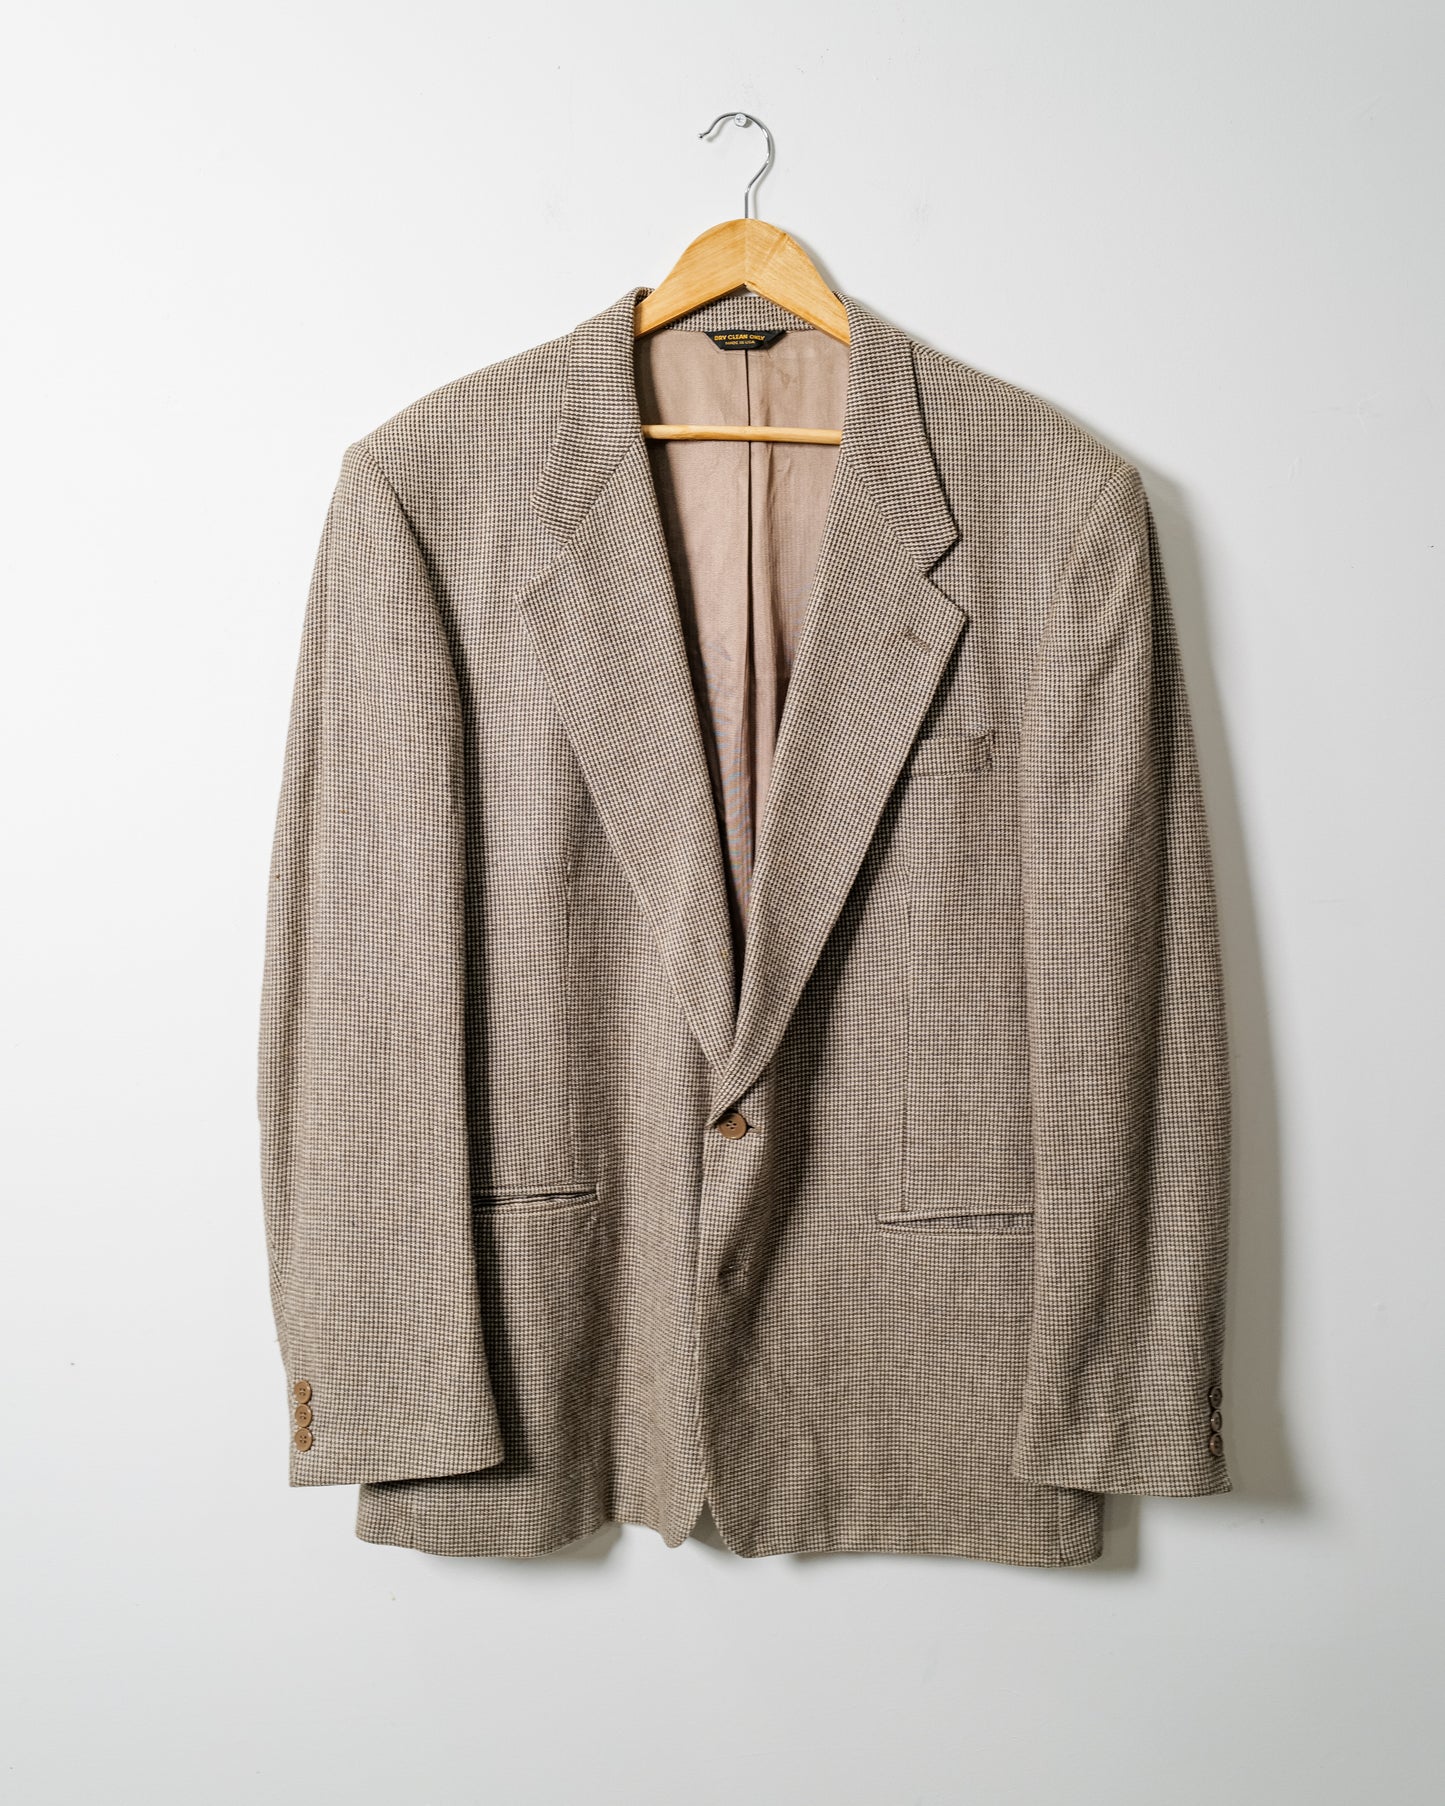 Vintage Givenchy Mens Suit Jacket - Size XL